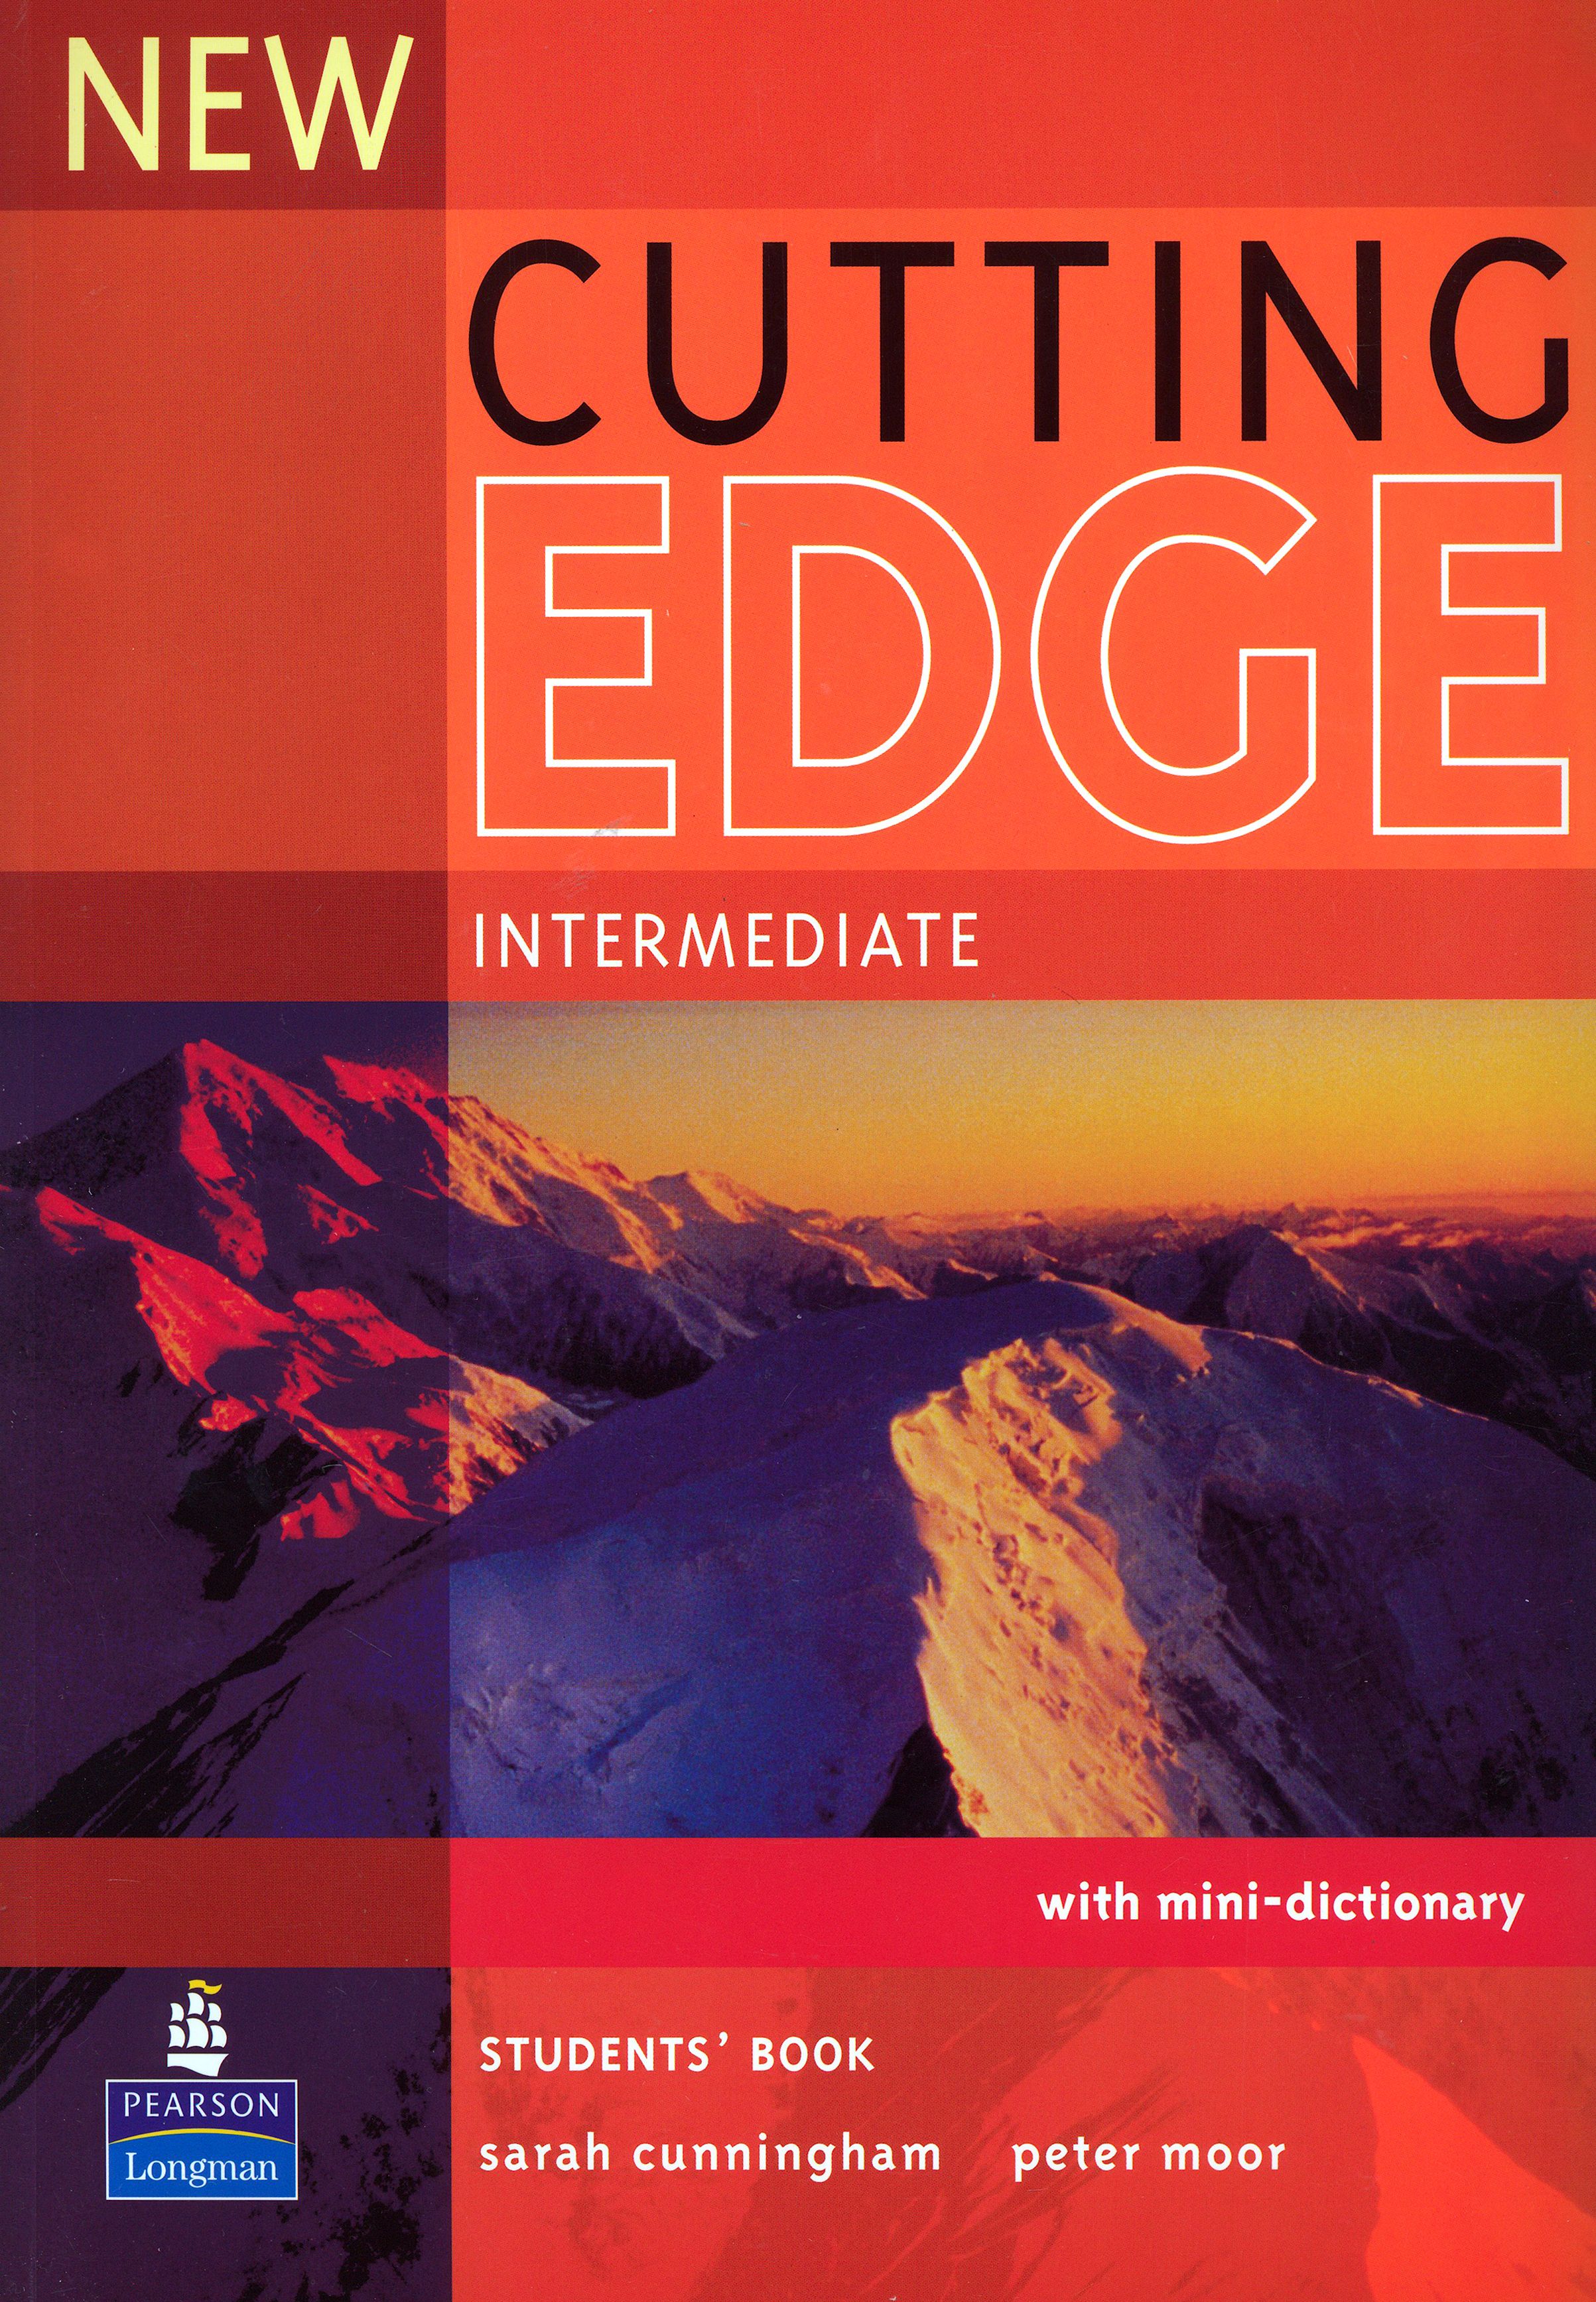 New Cutting Edge учебник. New Cutting Edge Upper Intermediate student's book. Cutting Edge Intermediate 3rd Edition. Cutting Edge Intermediate student's book.